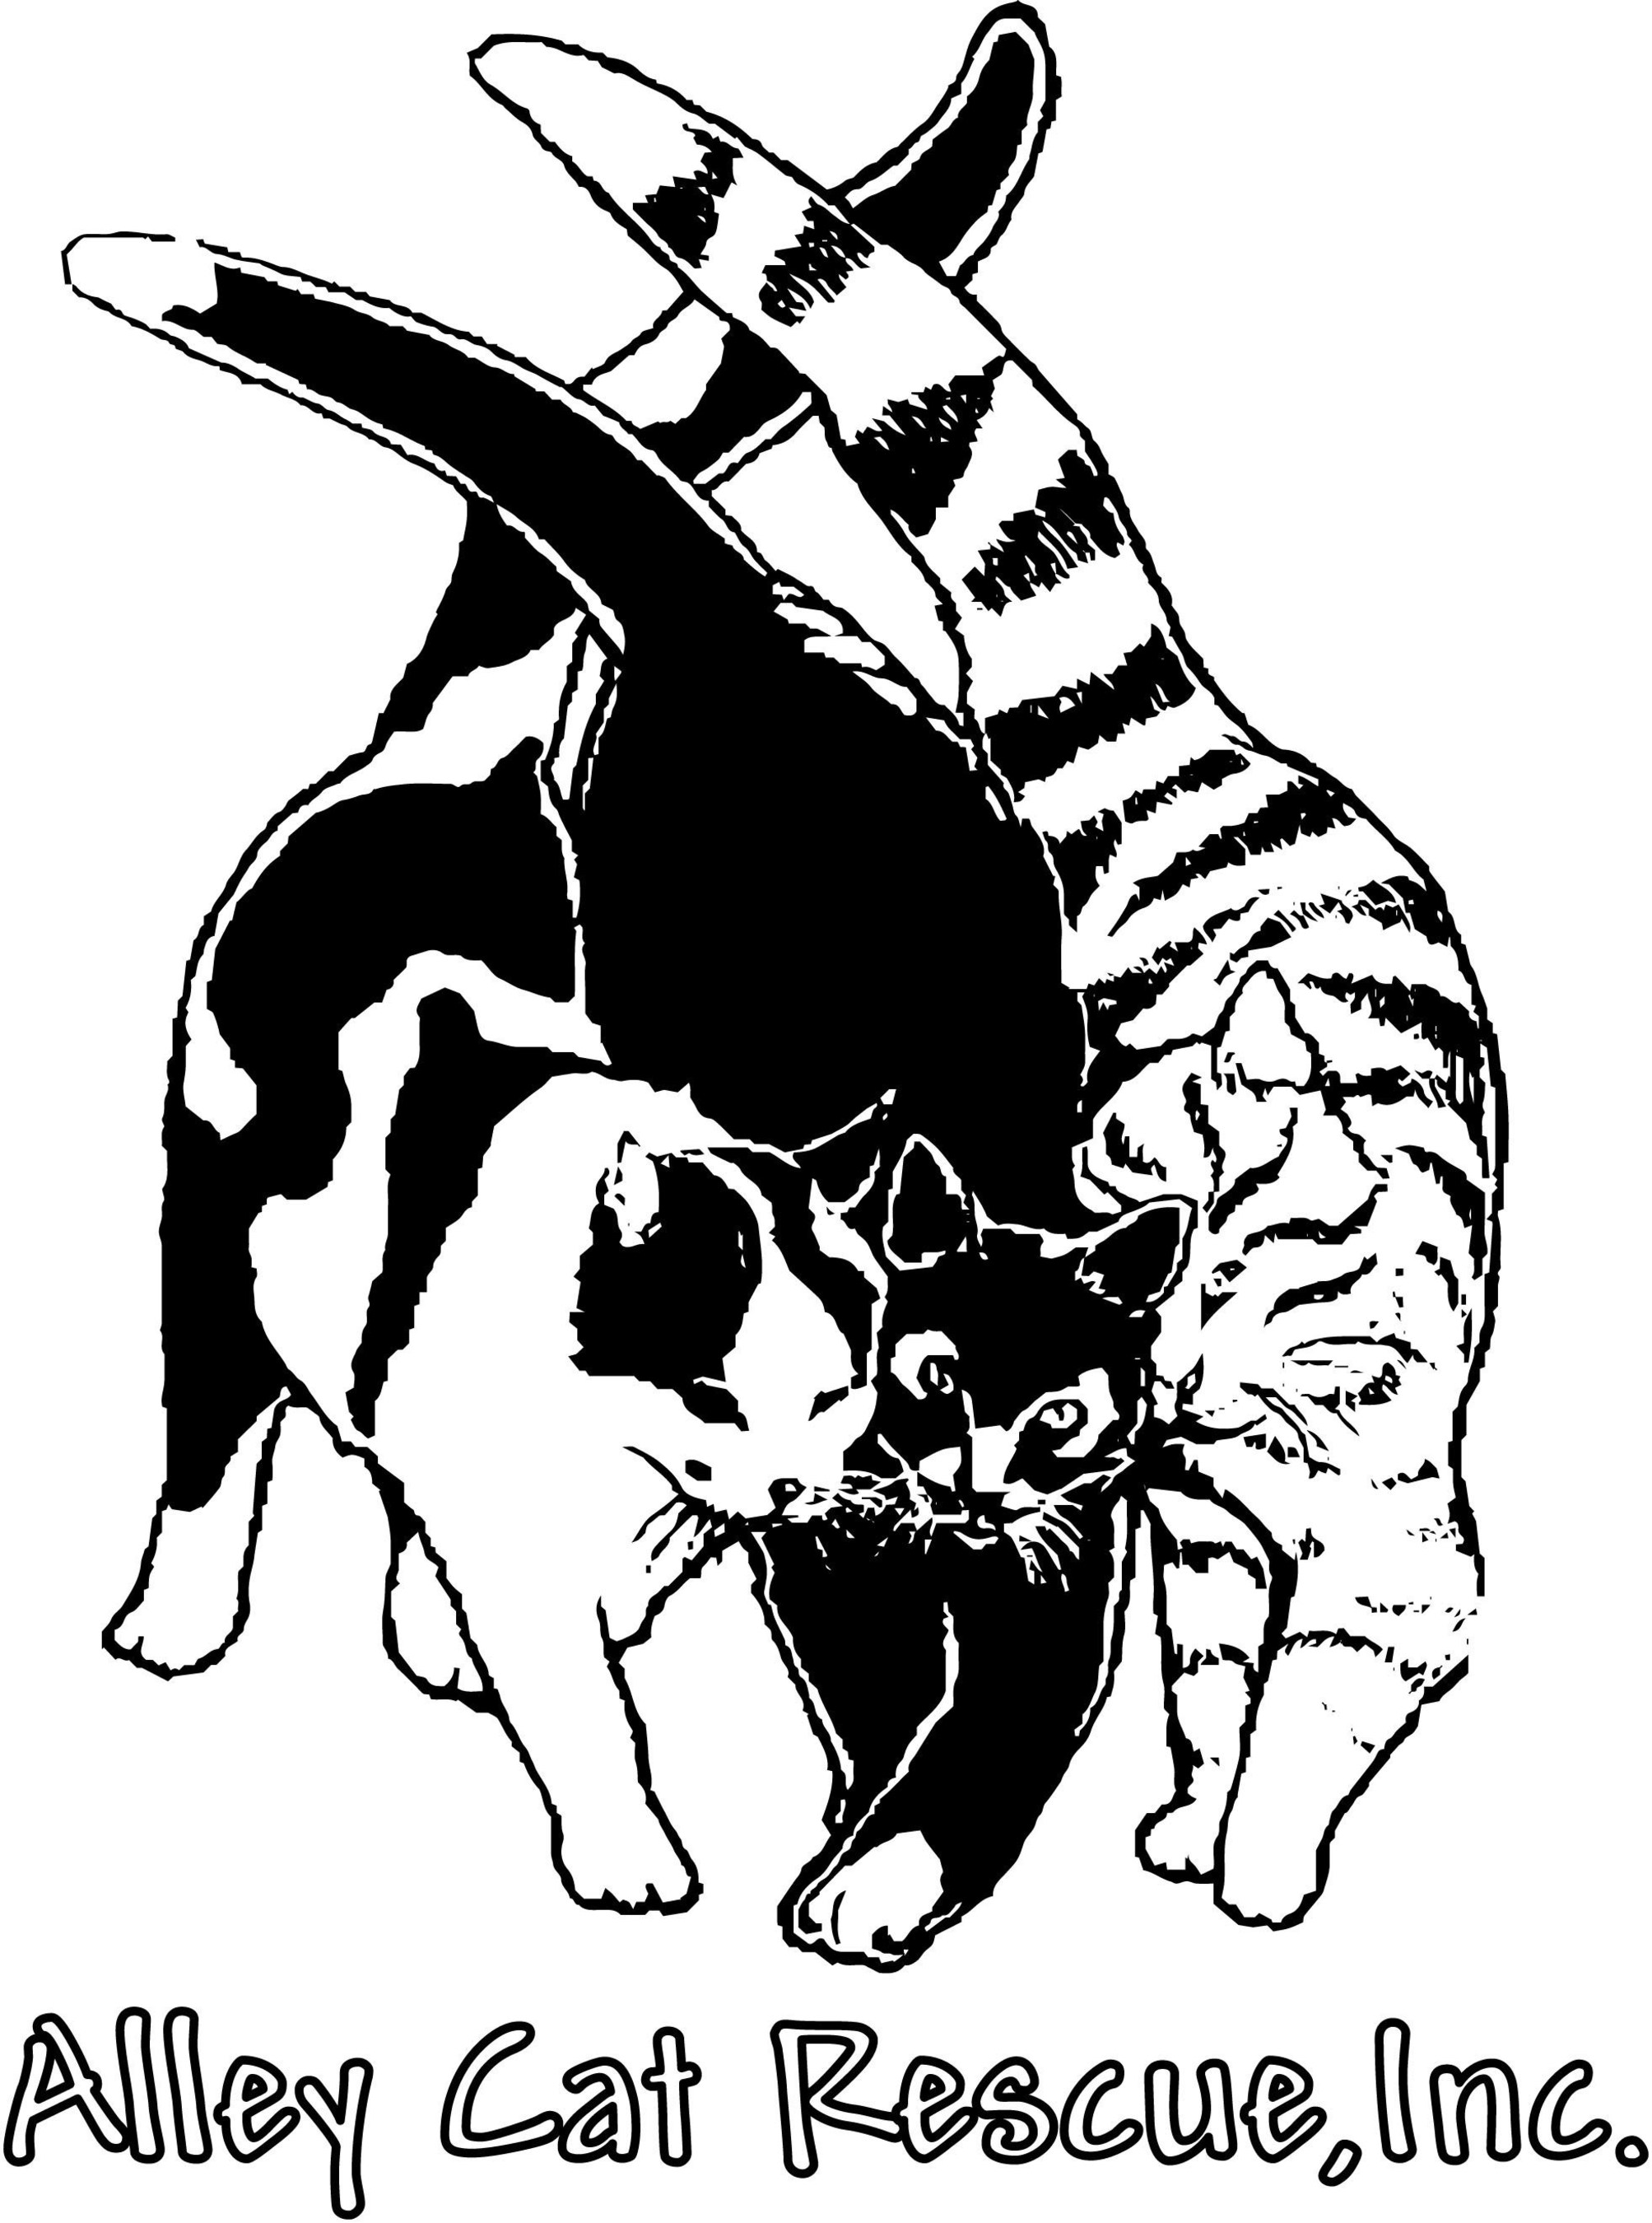 Alley Cat Rescue, Inc. logo